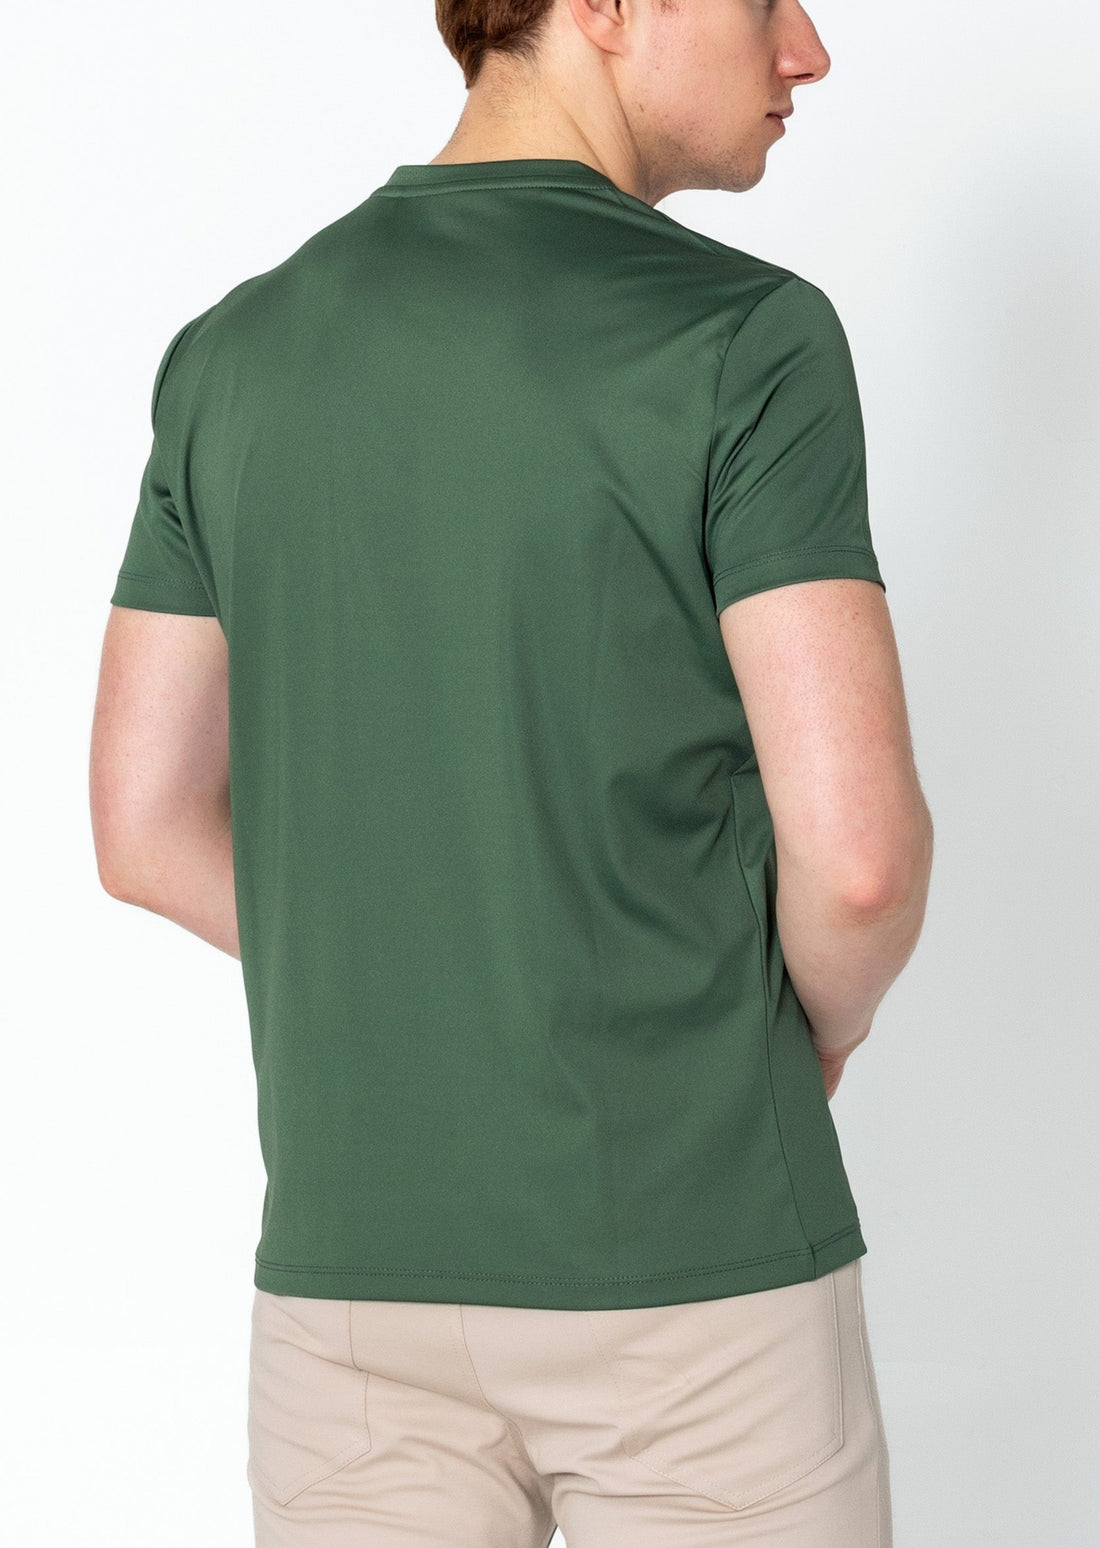 V-neck Fitted Sleeves T-shirt - Khaki